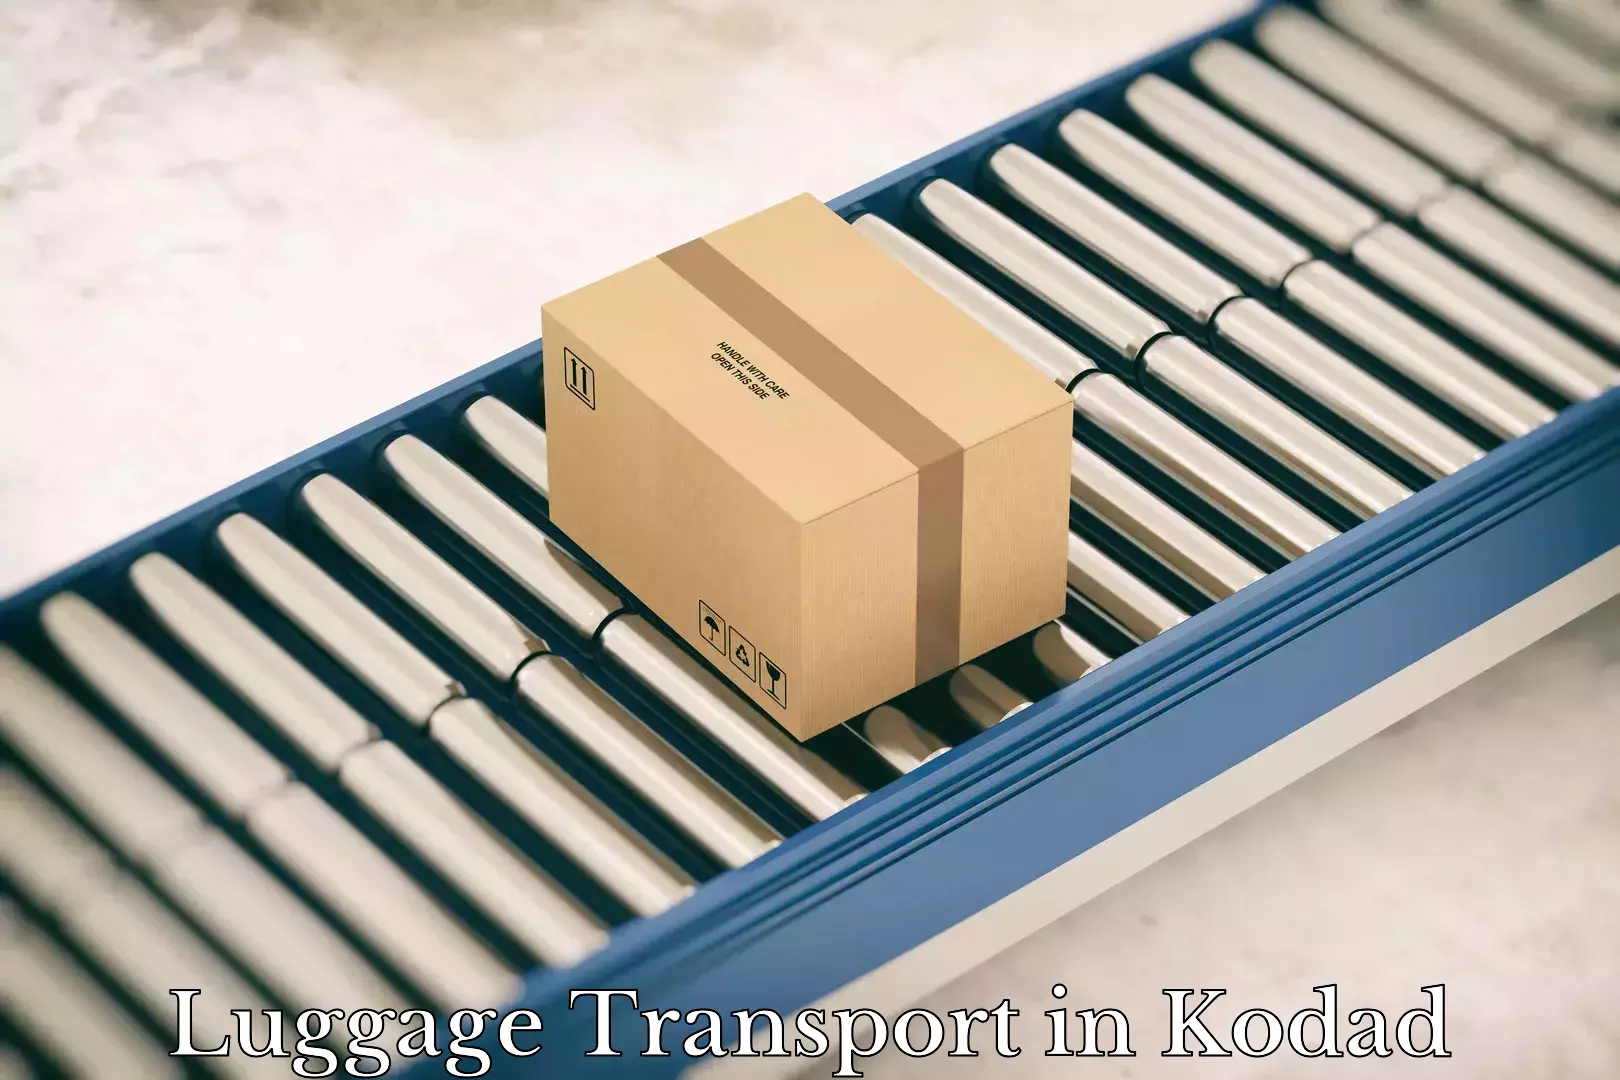 Corporate baggage transport in Kodad